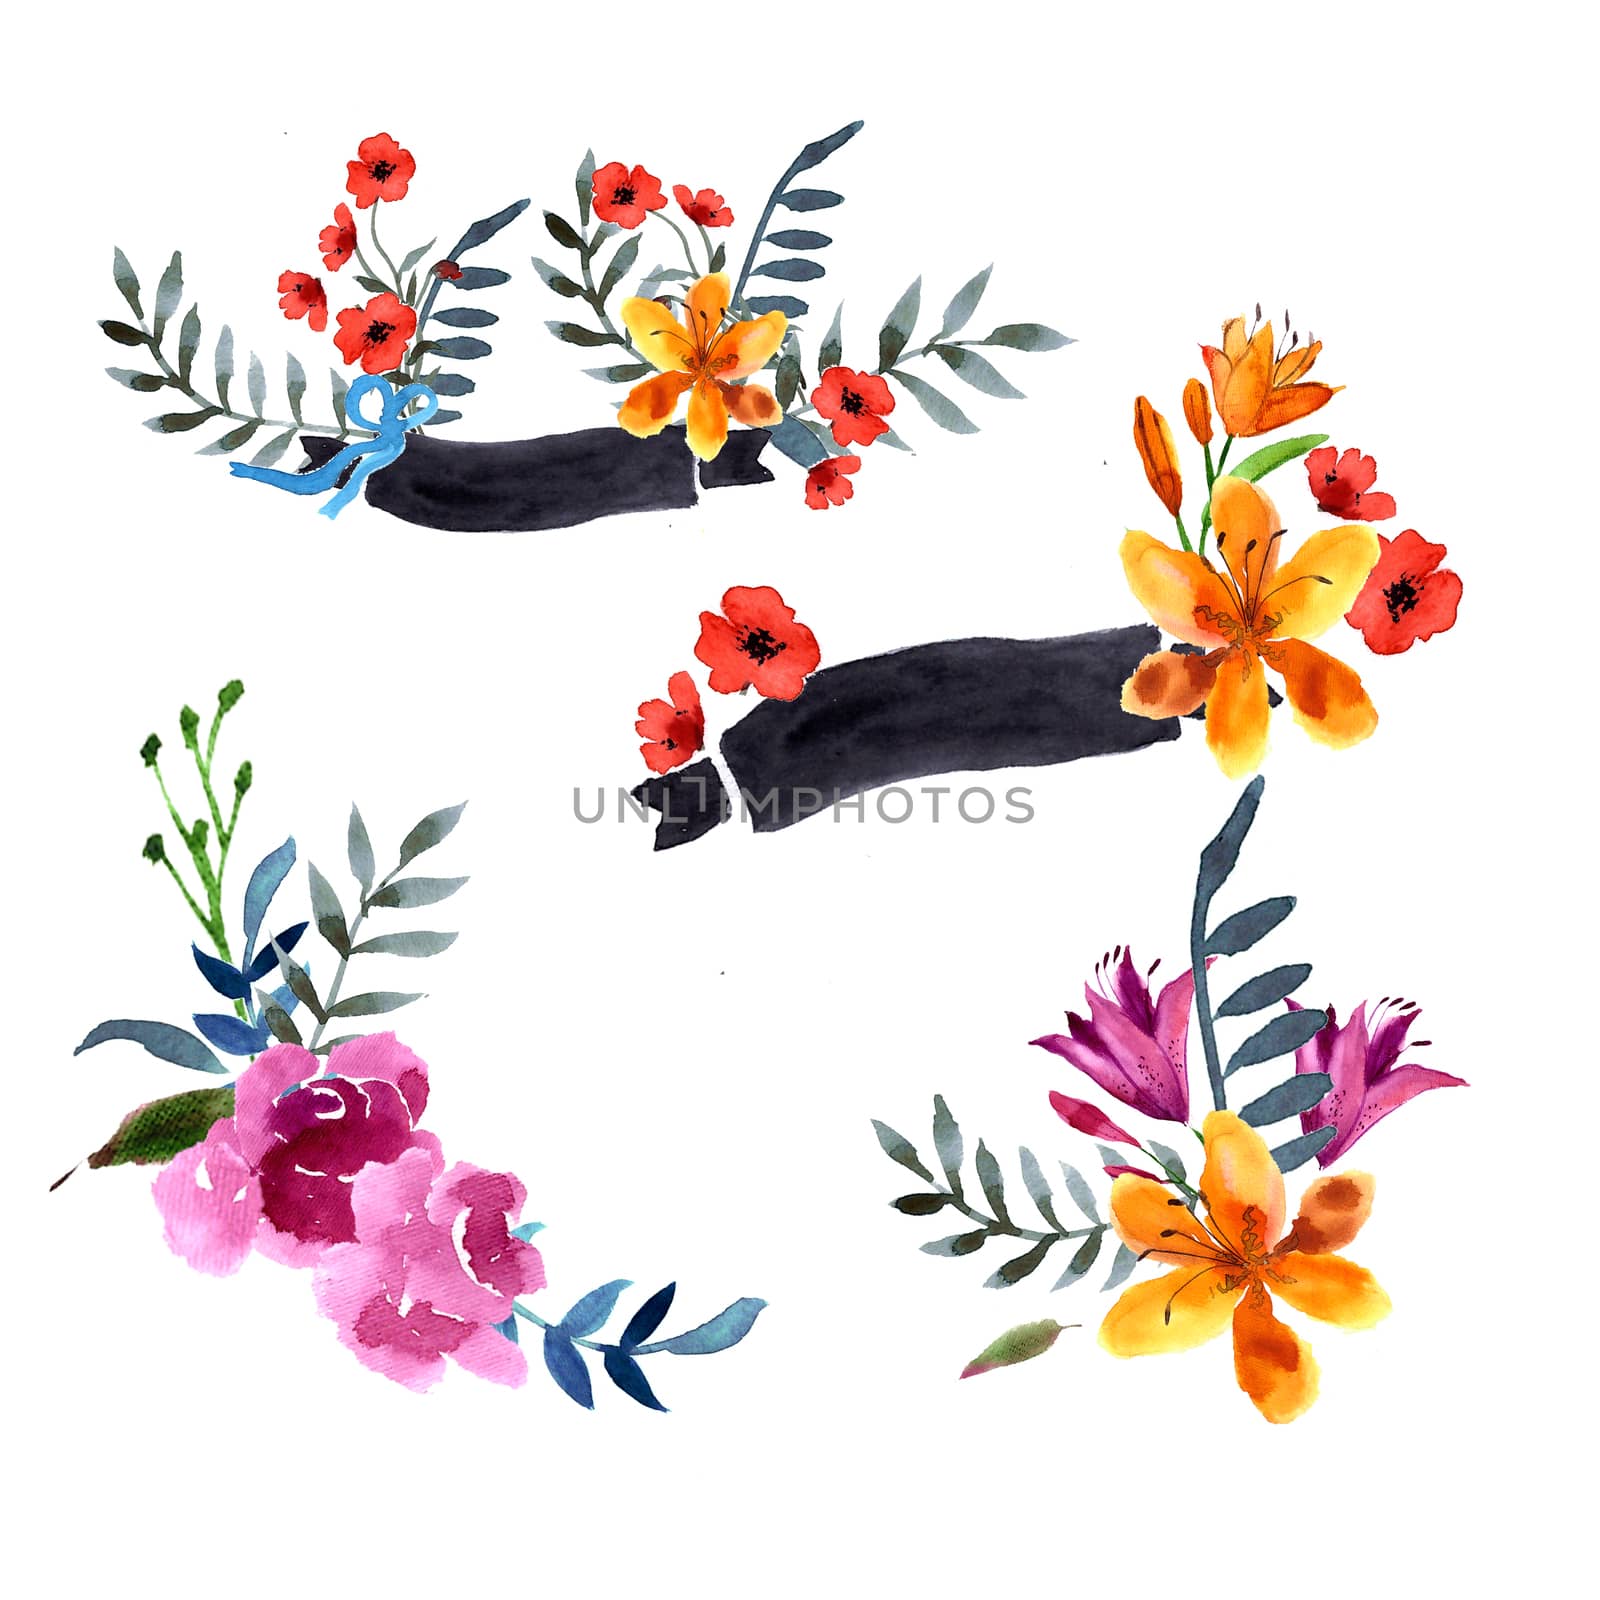 Wildflowers blooming delicate flowers background painted  watercolors. Raster illustration